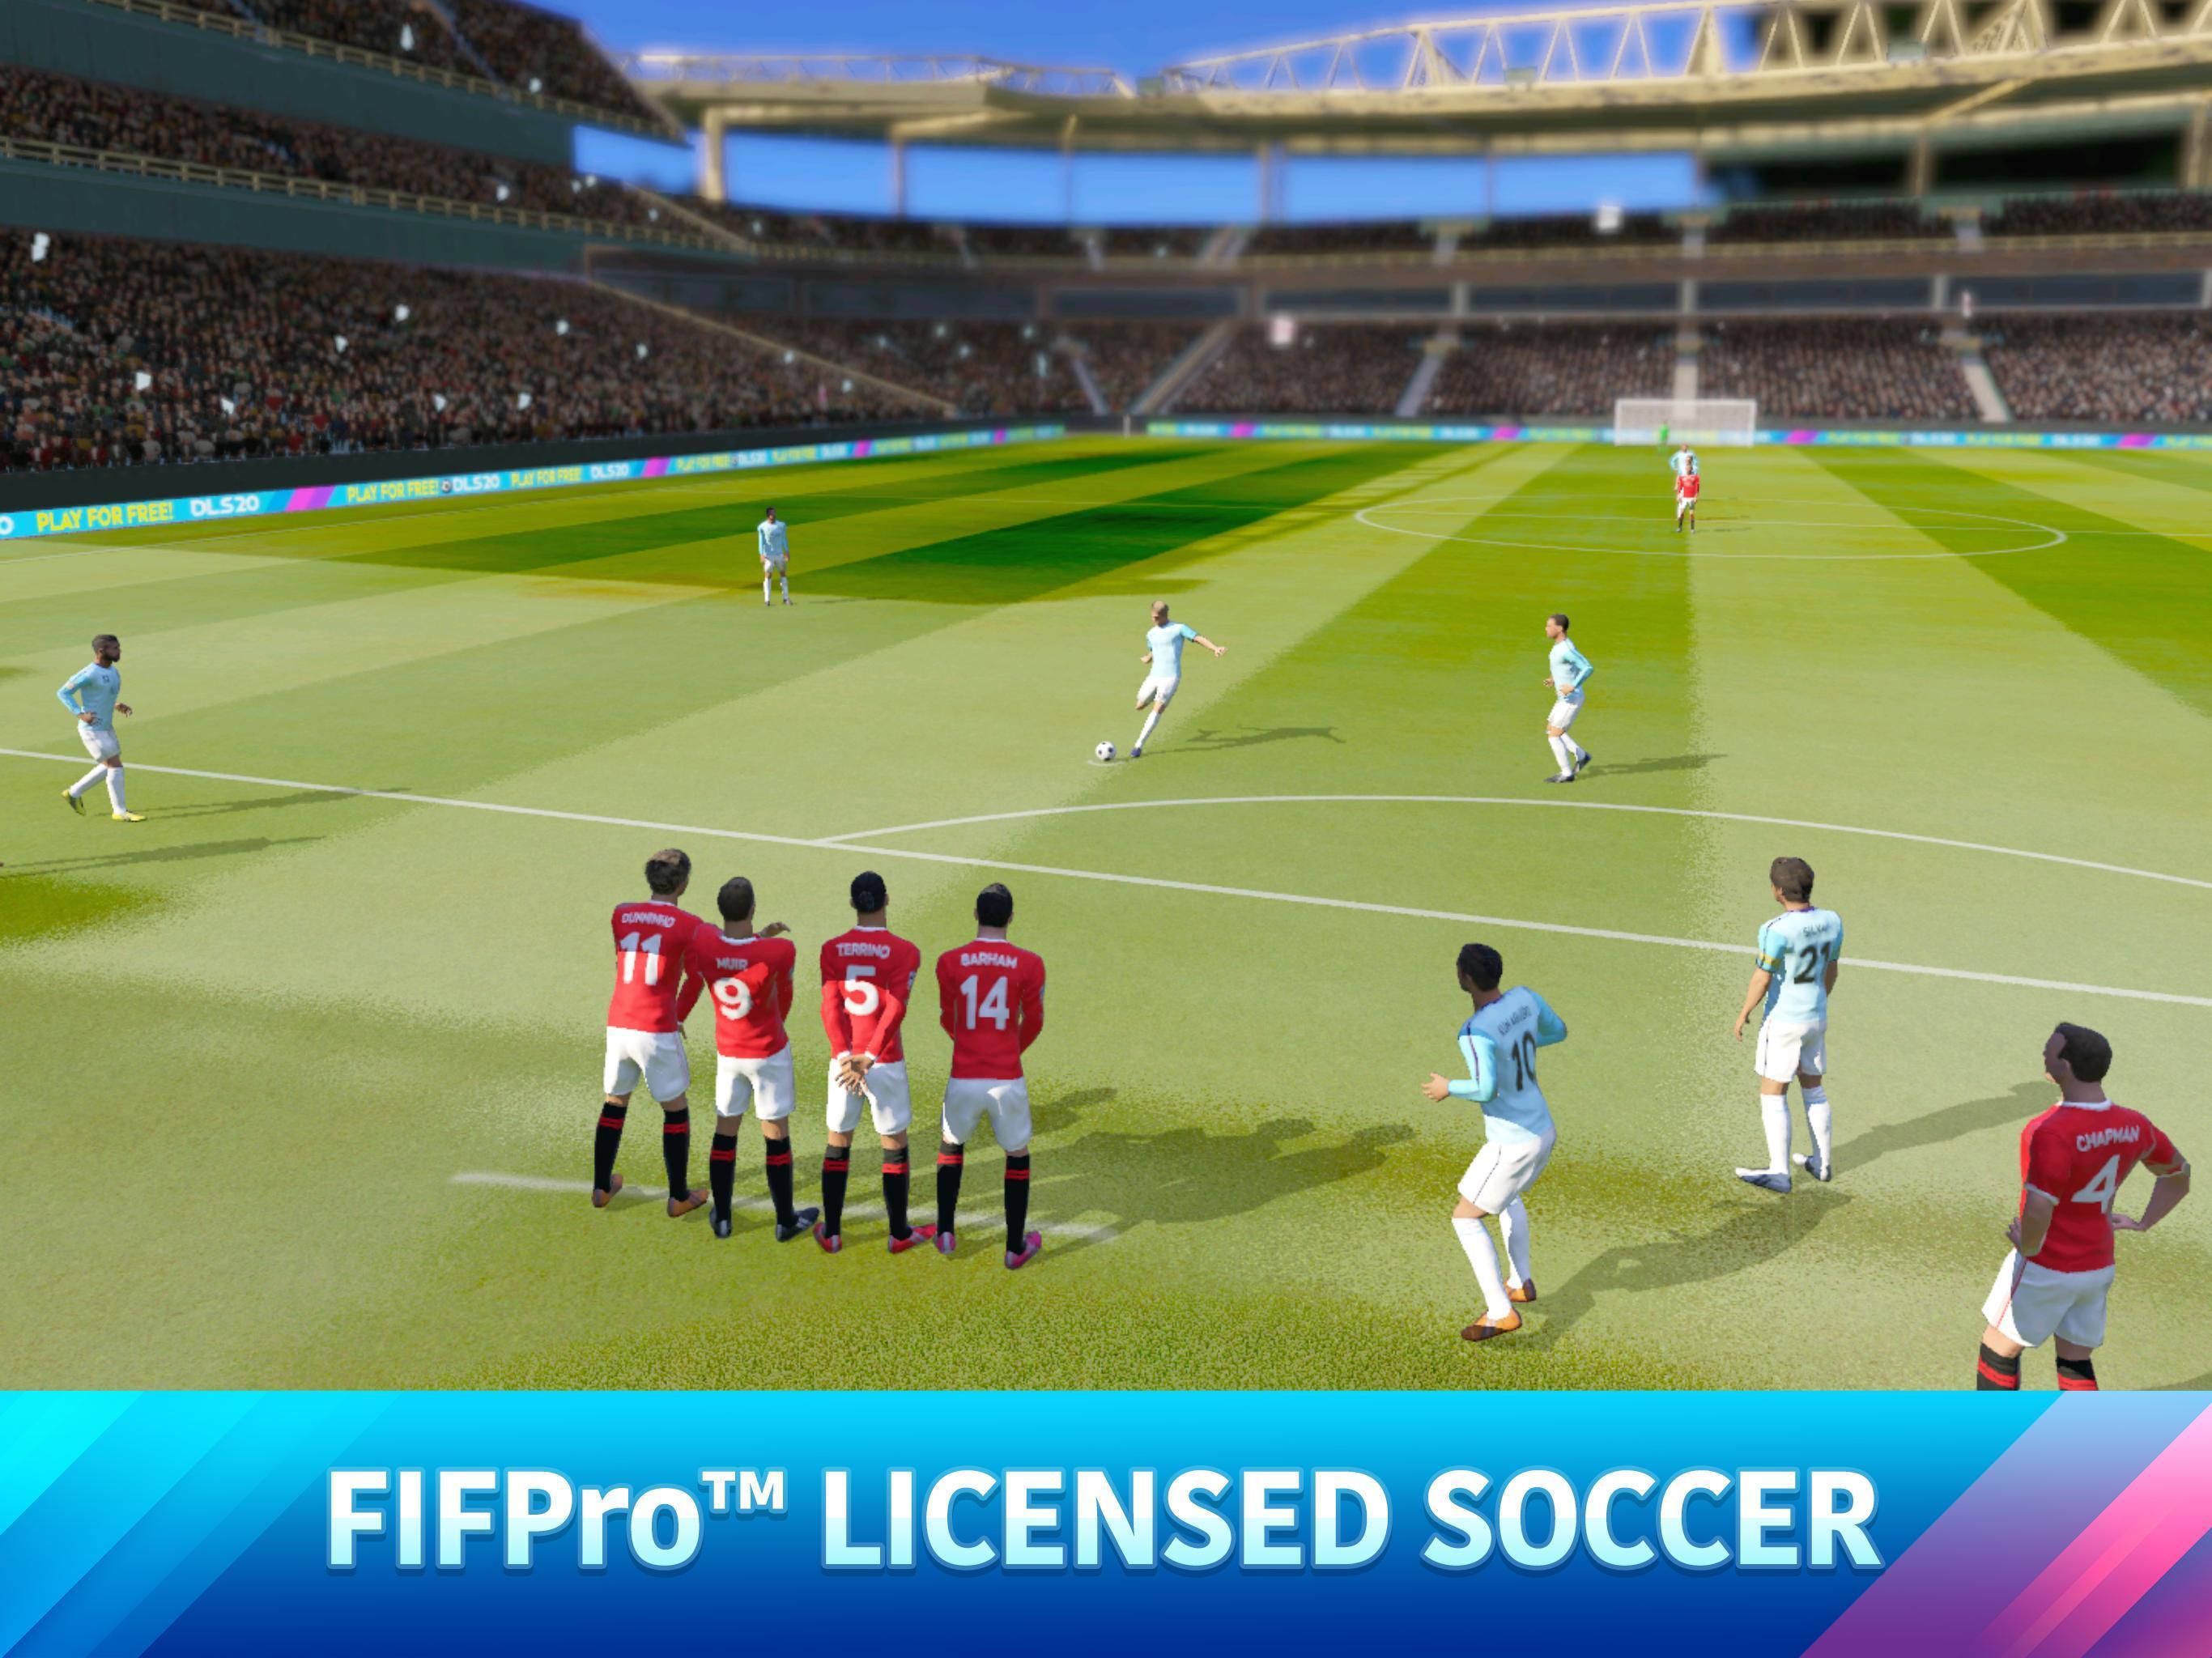 dream league soccer apk free download